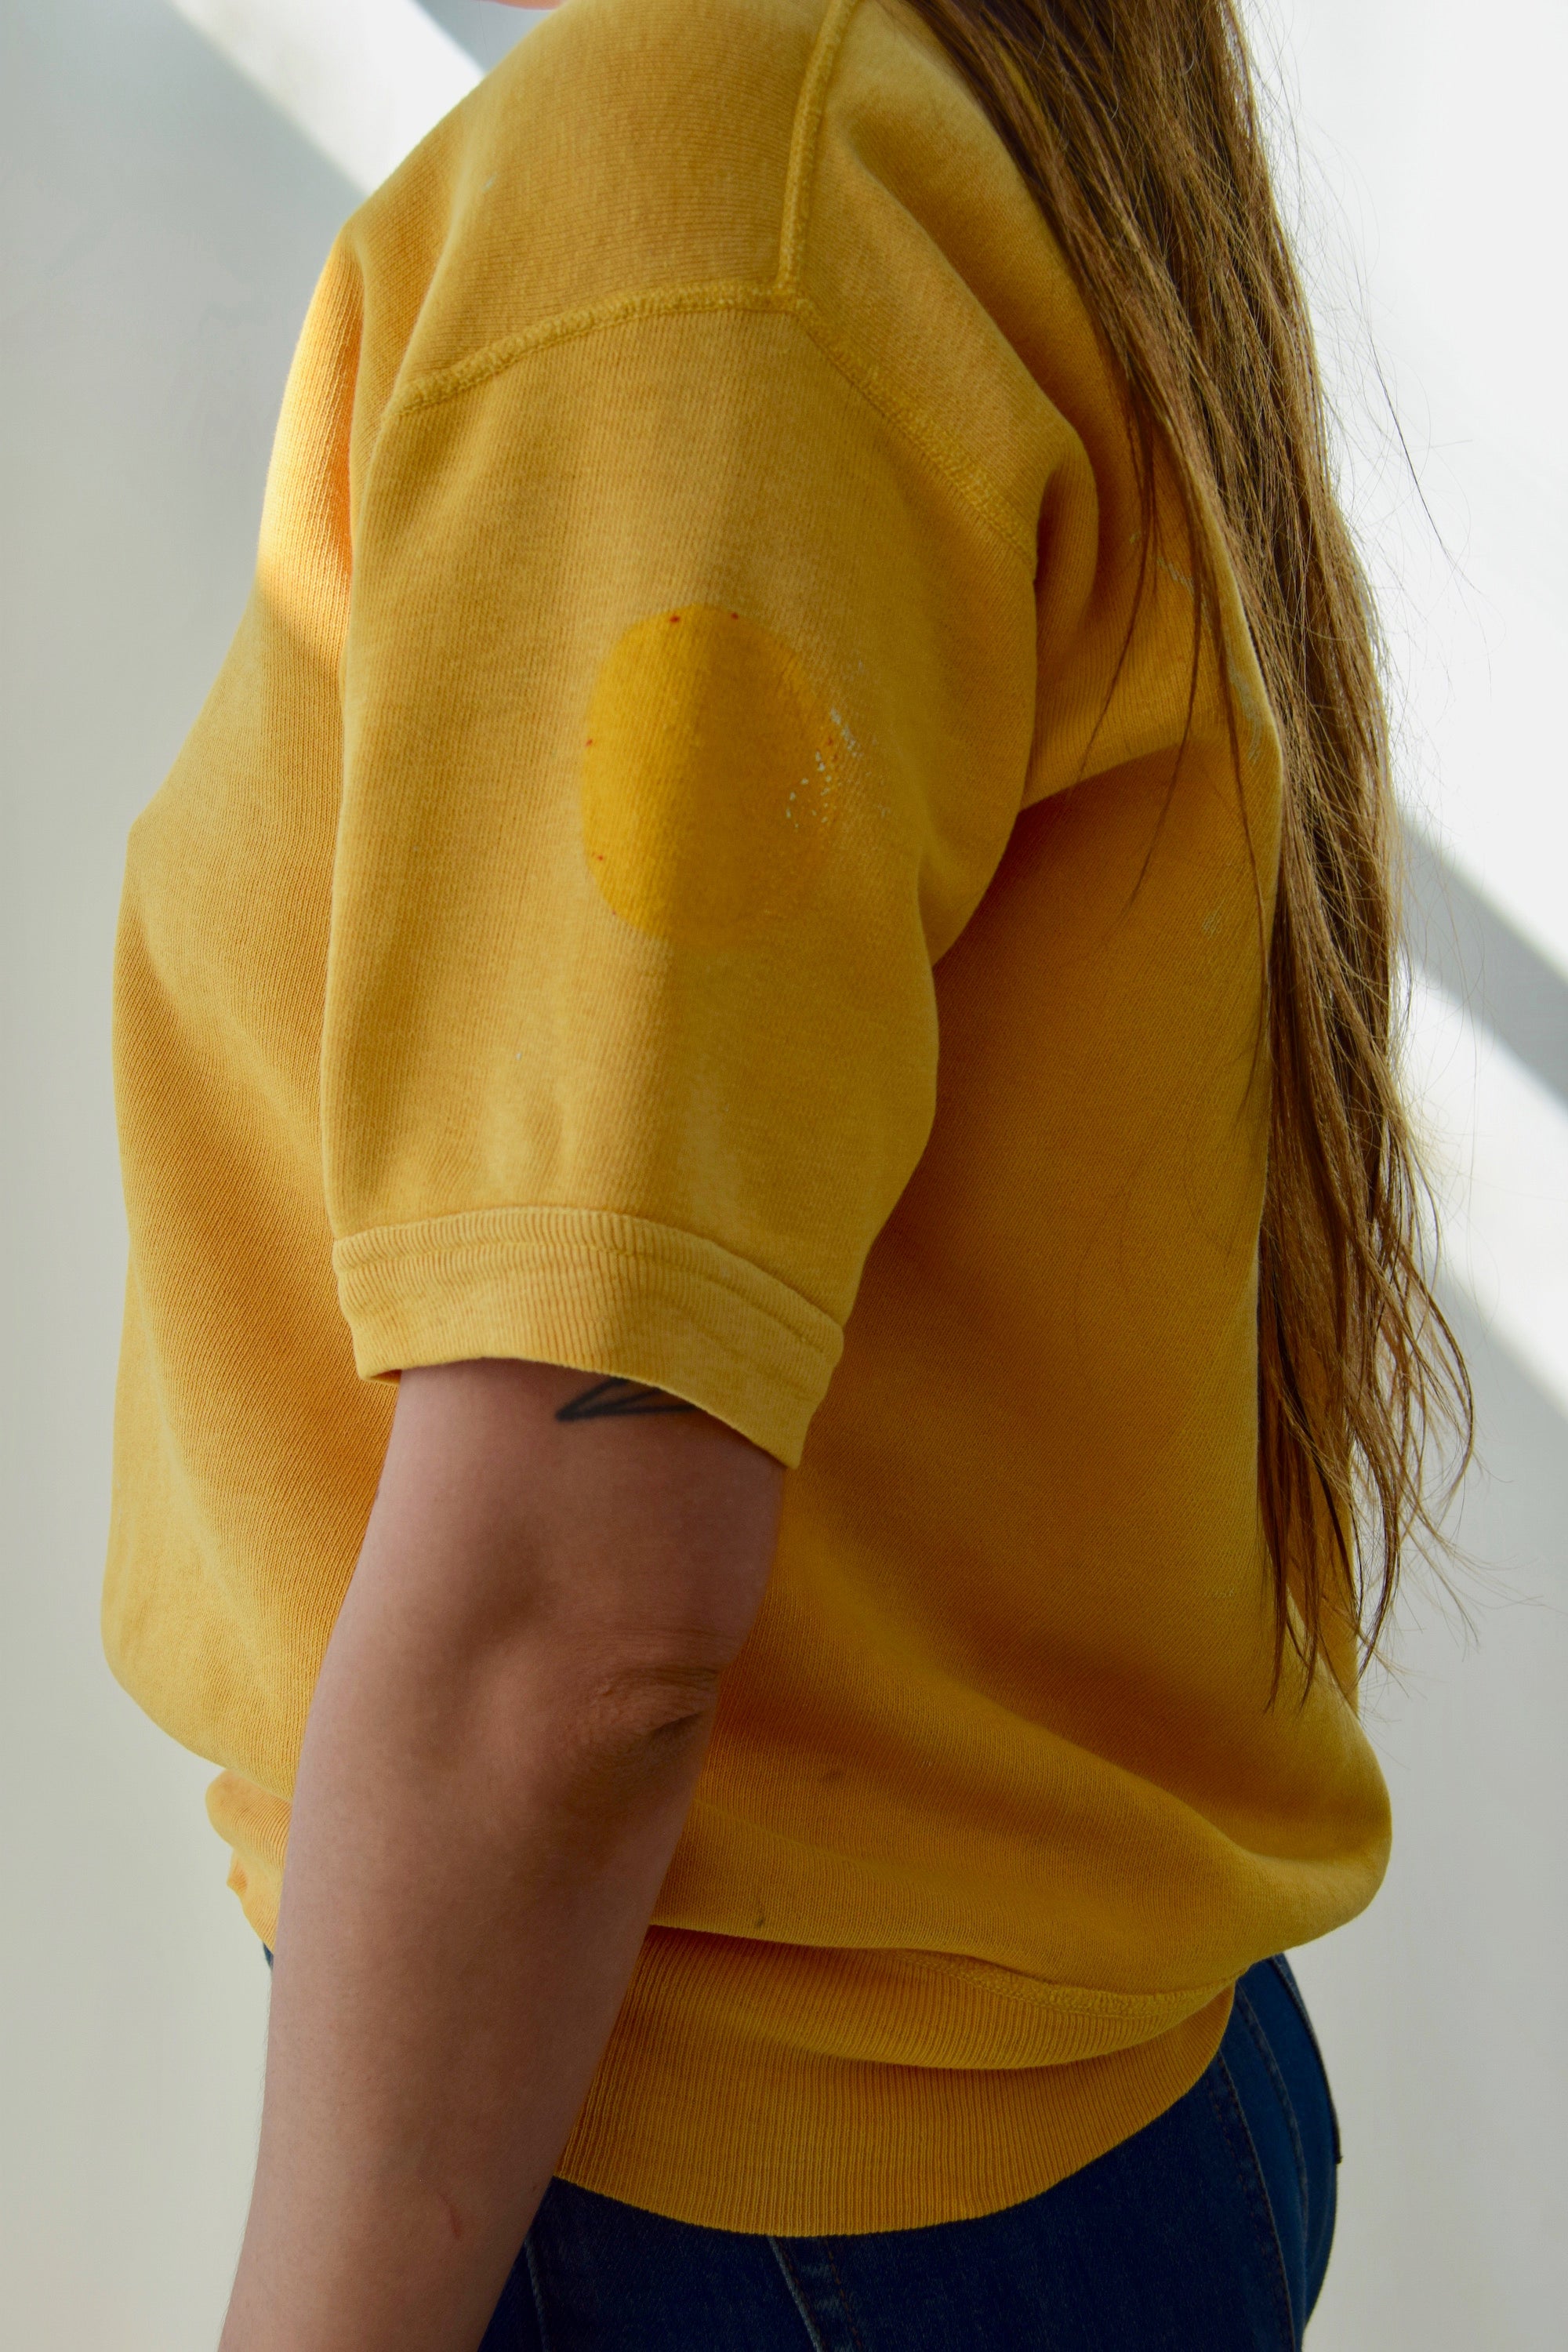 Vintage "Southern" Sunny Yellow Short Sleeve Sweatshirt